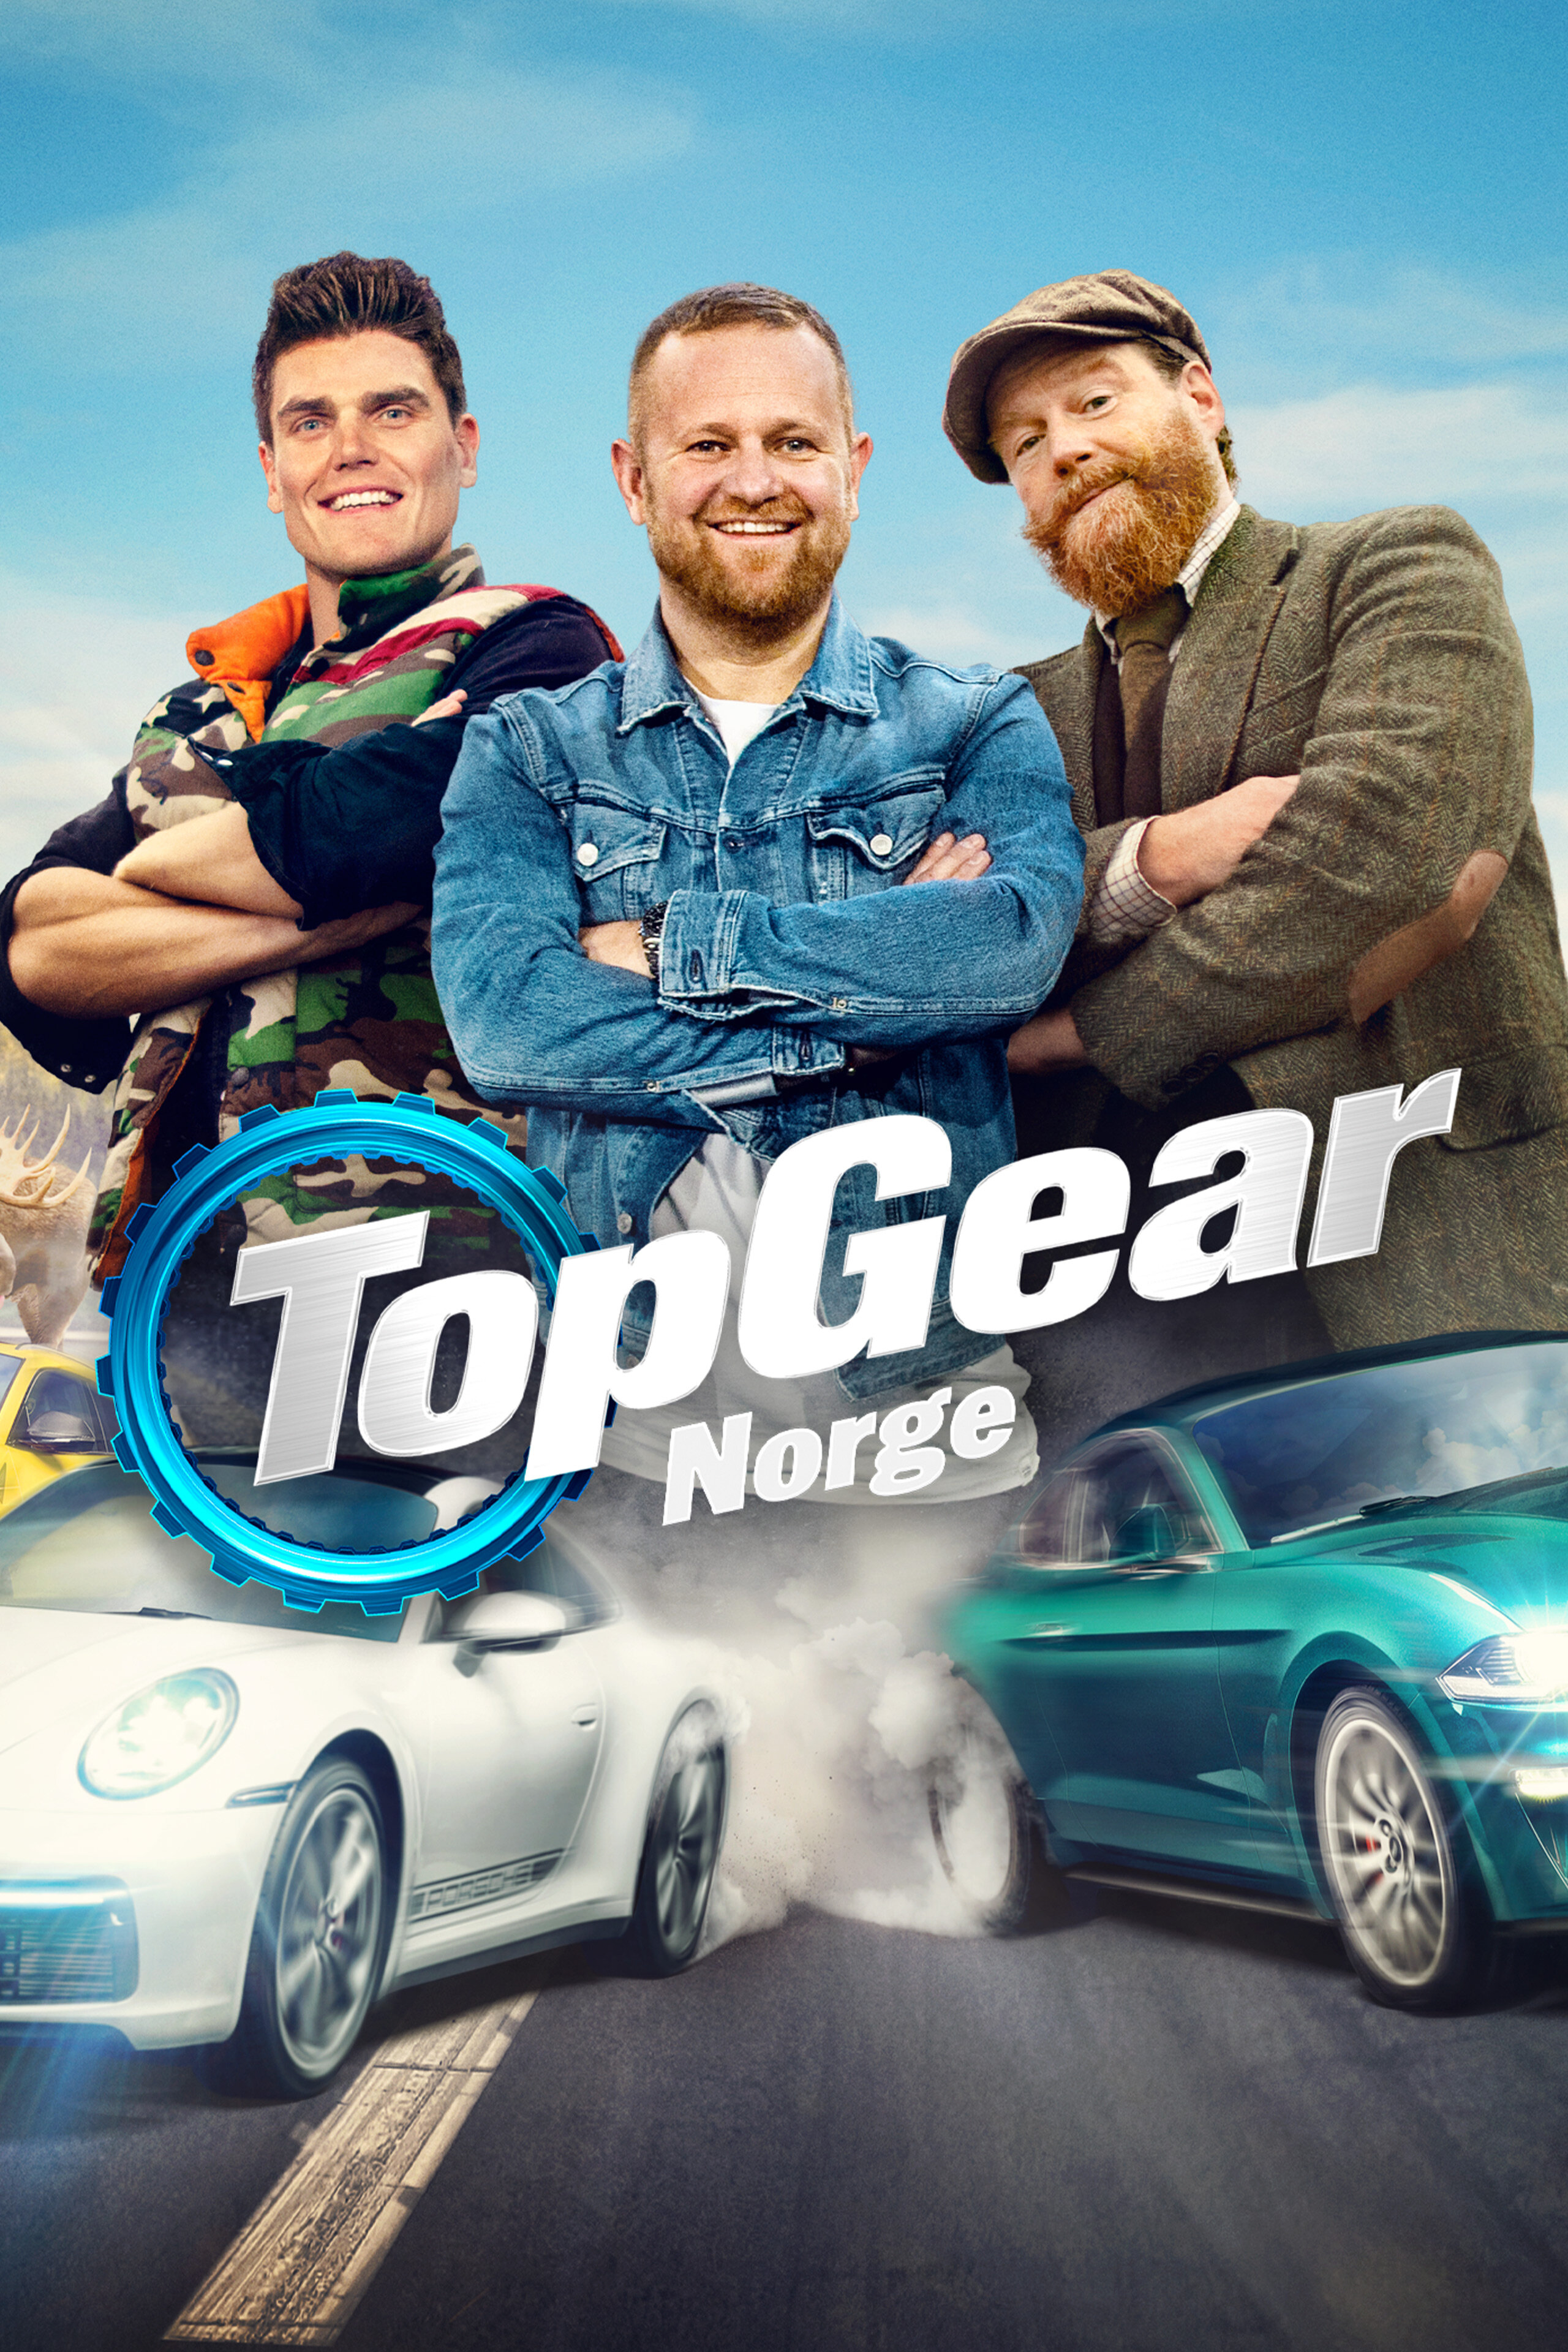 Top Gear Norge ne zaman